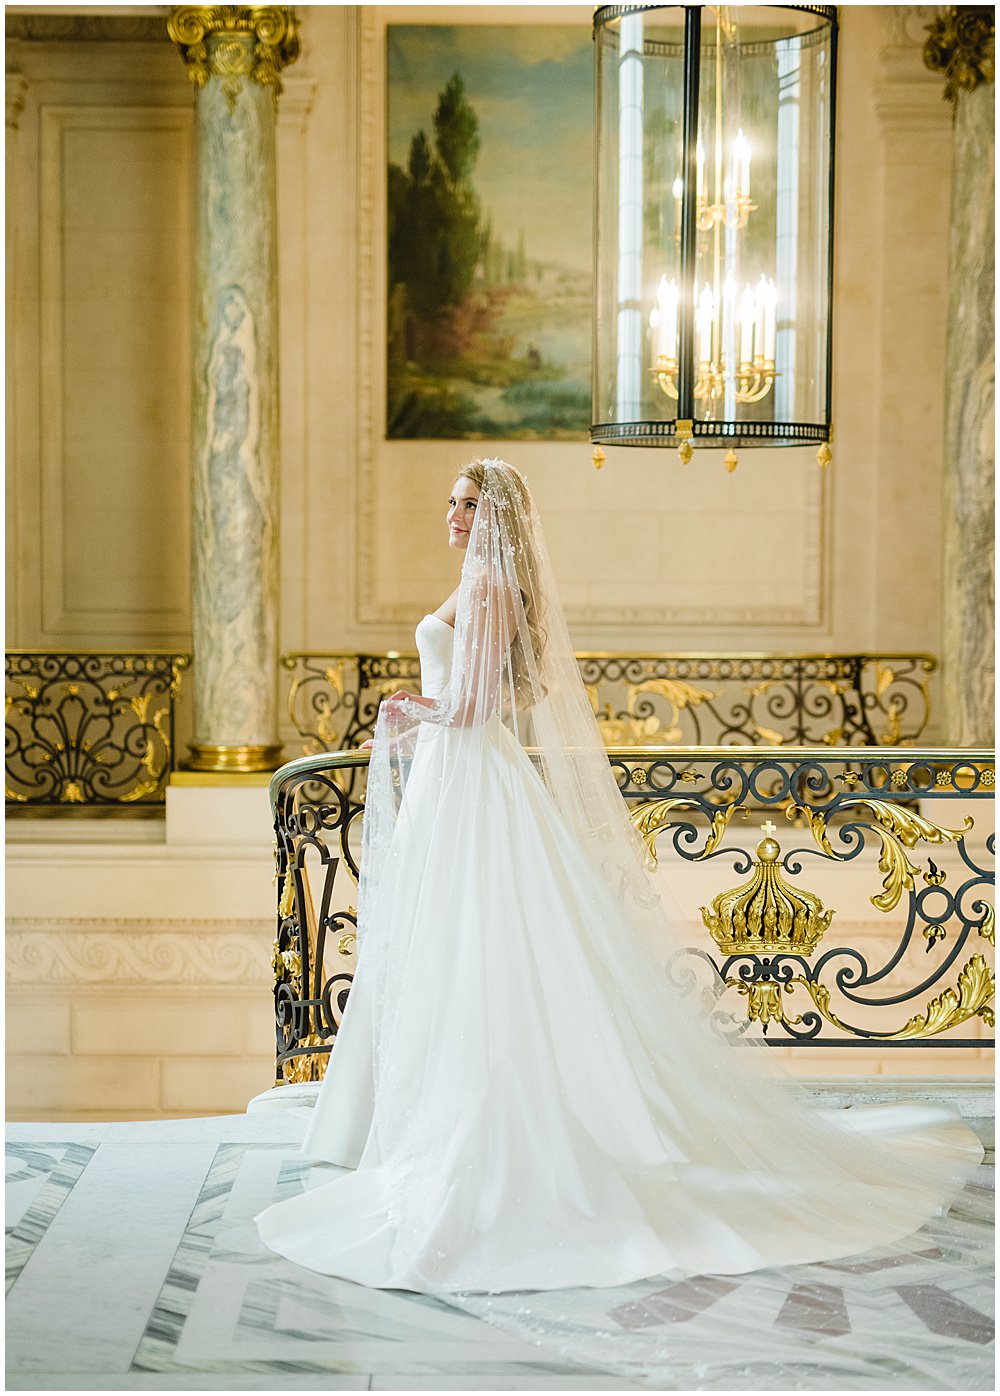 Top 10 Best Wedding Venues in Paris - Shangri-la paris